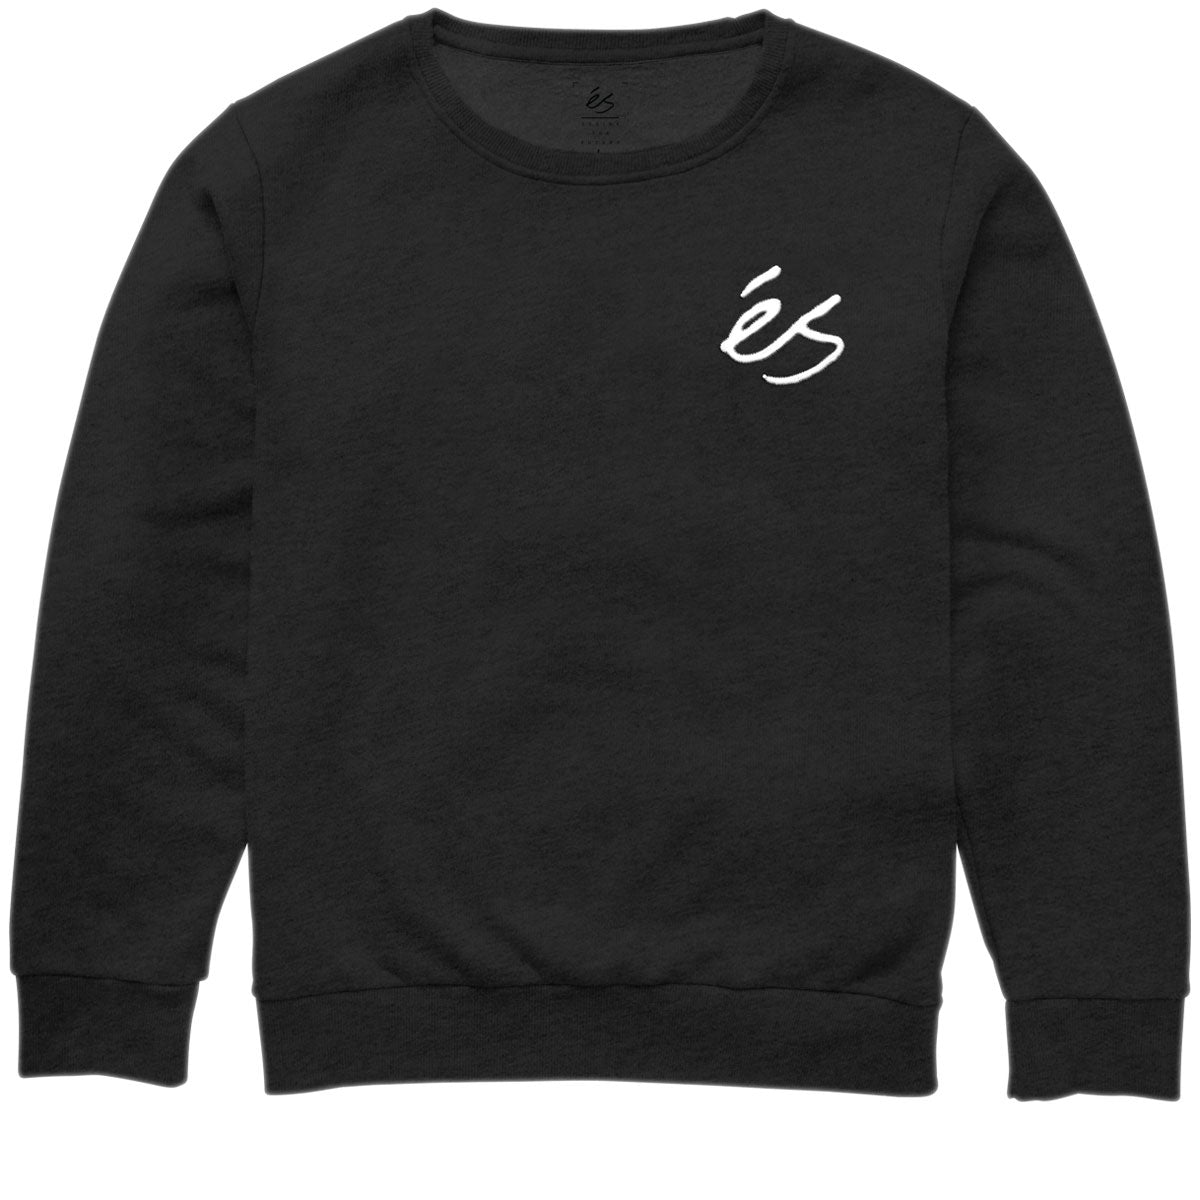 eS Mini Script Crewneck Sweatshirt - Black image 1